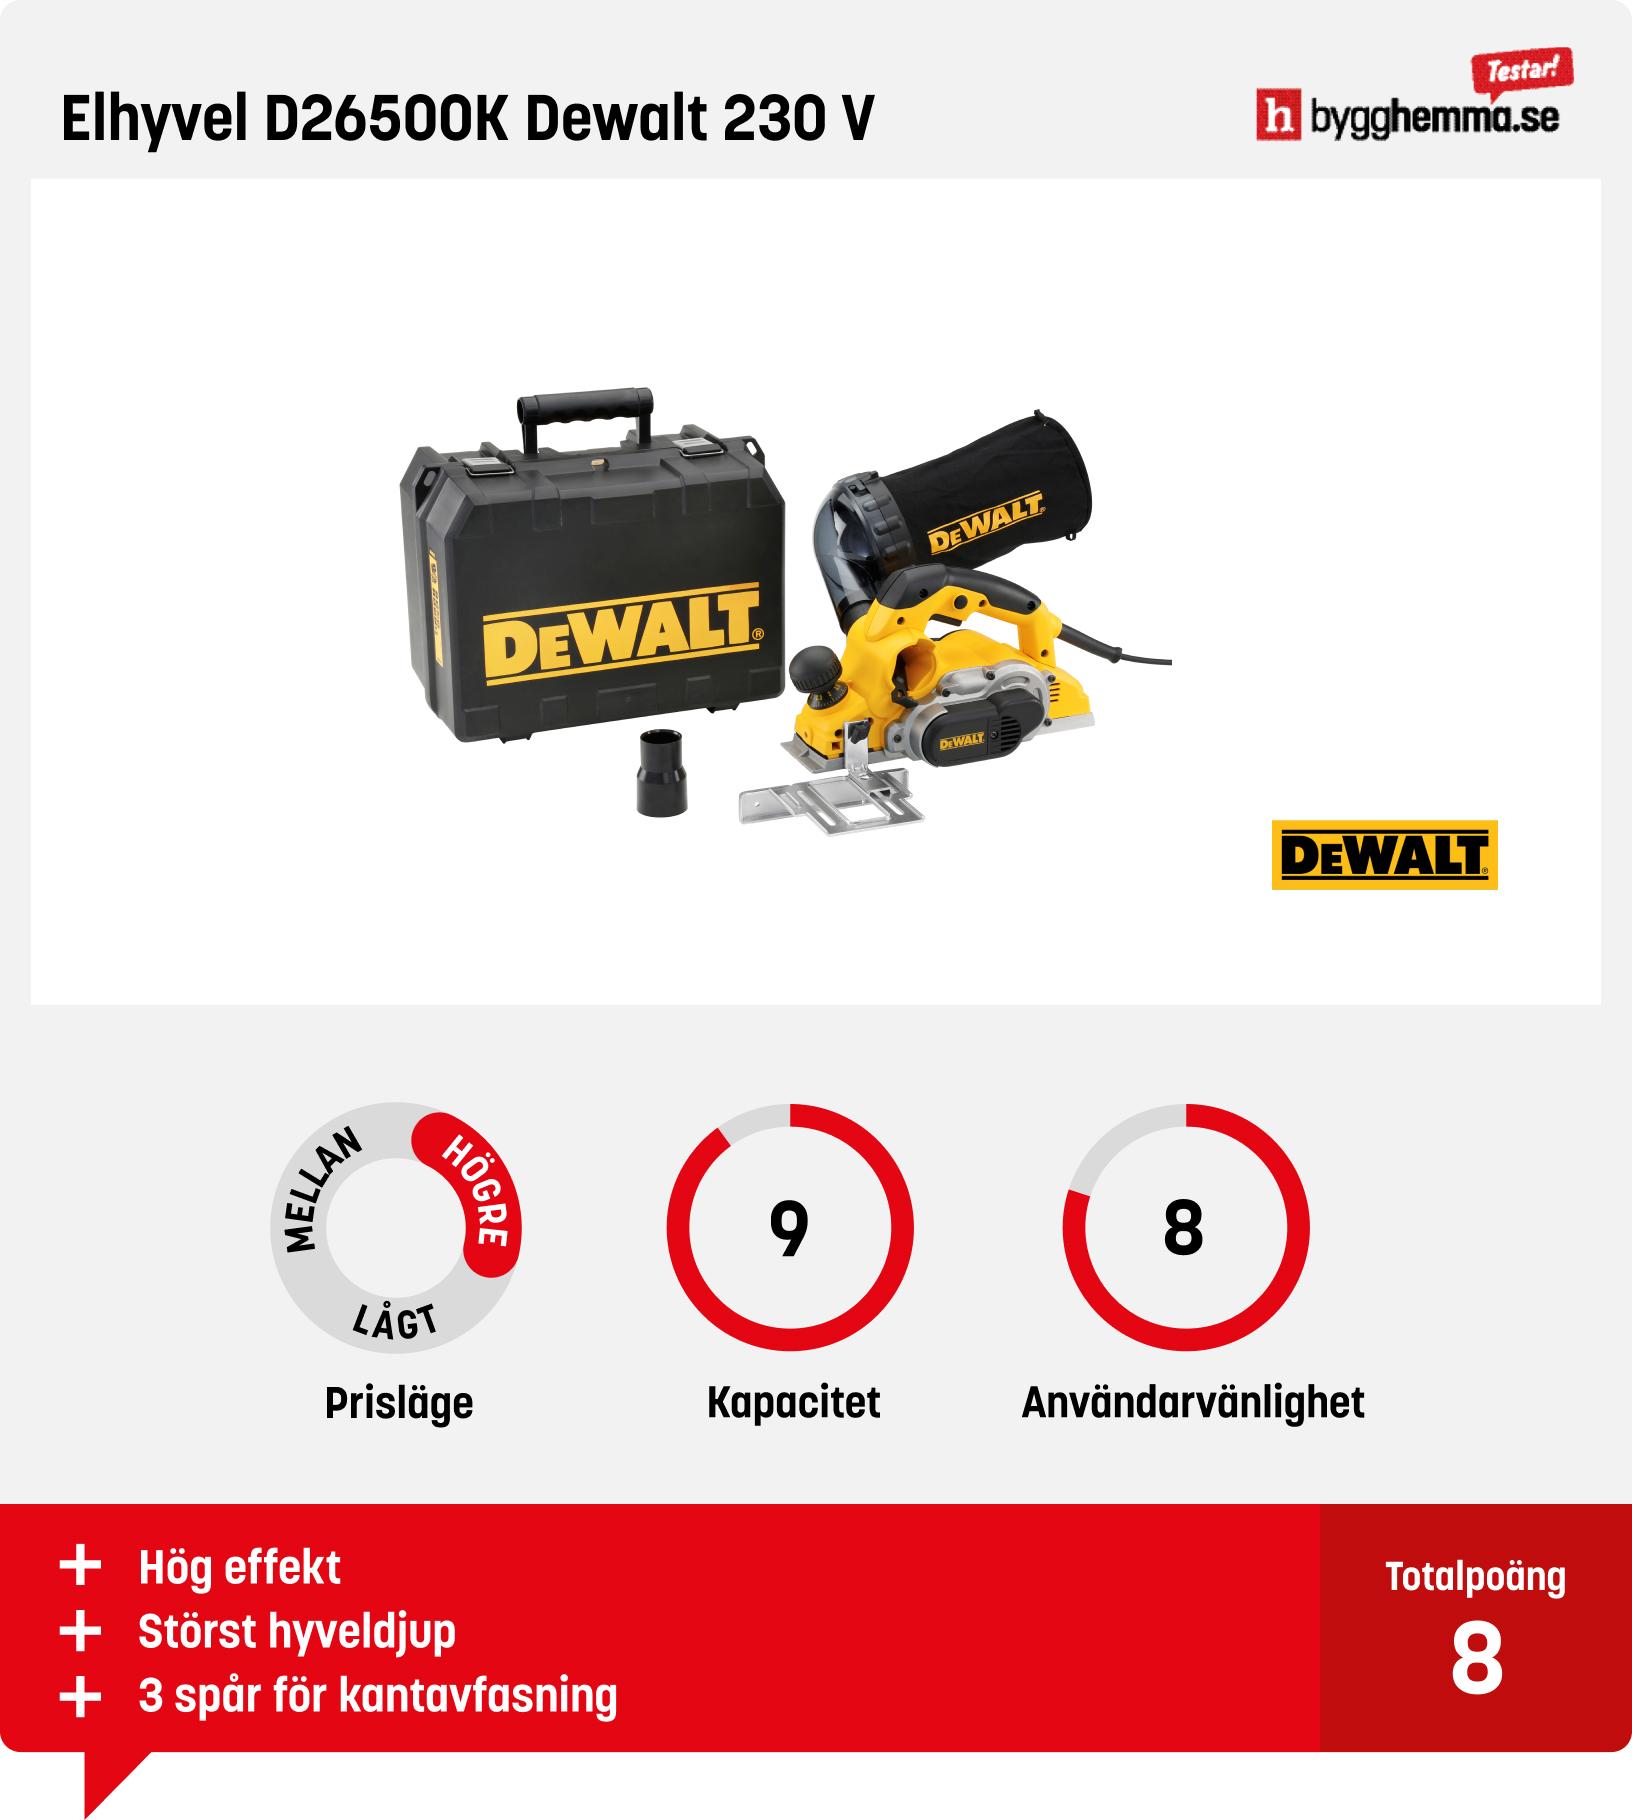 Elhyvel test - Elhyvel D26500K Dewalt 230 V